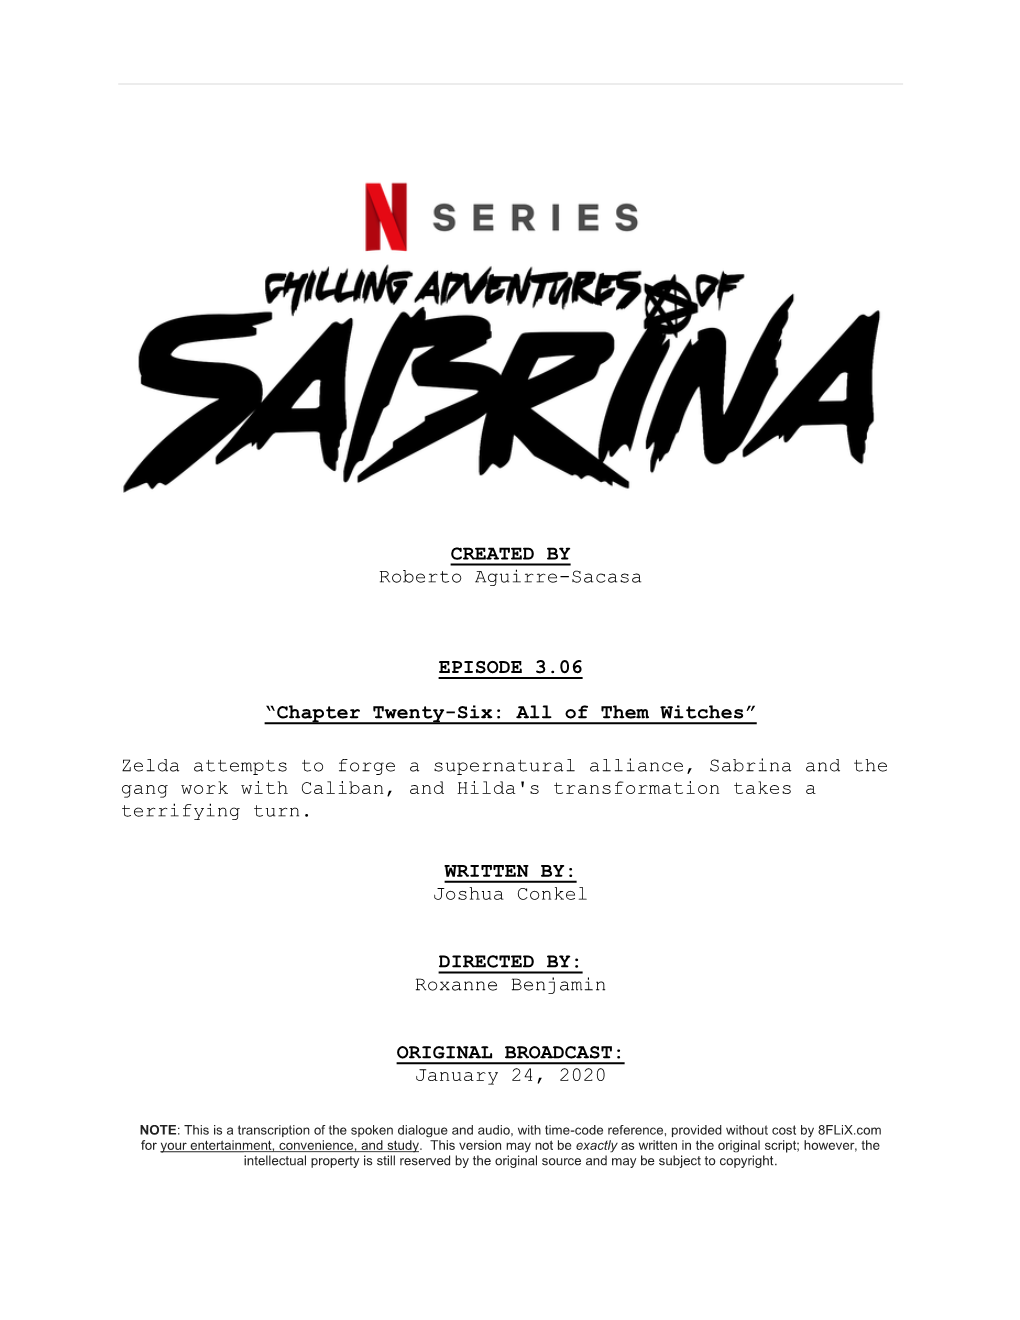 Chilling Adventures of Sabrina | Dialogue Transcript | S3:E6